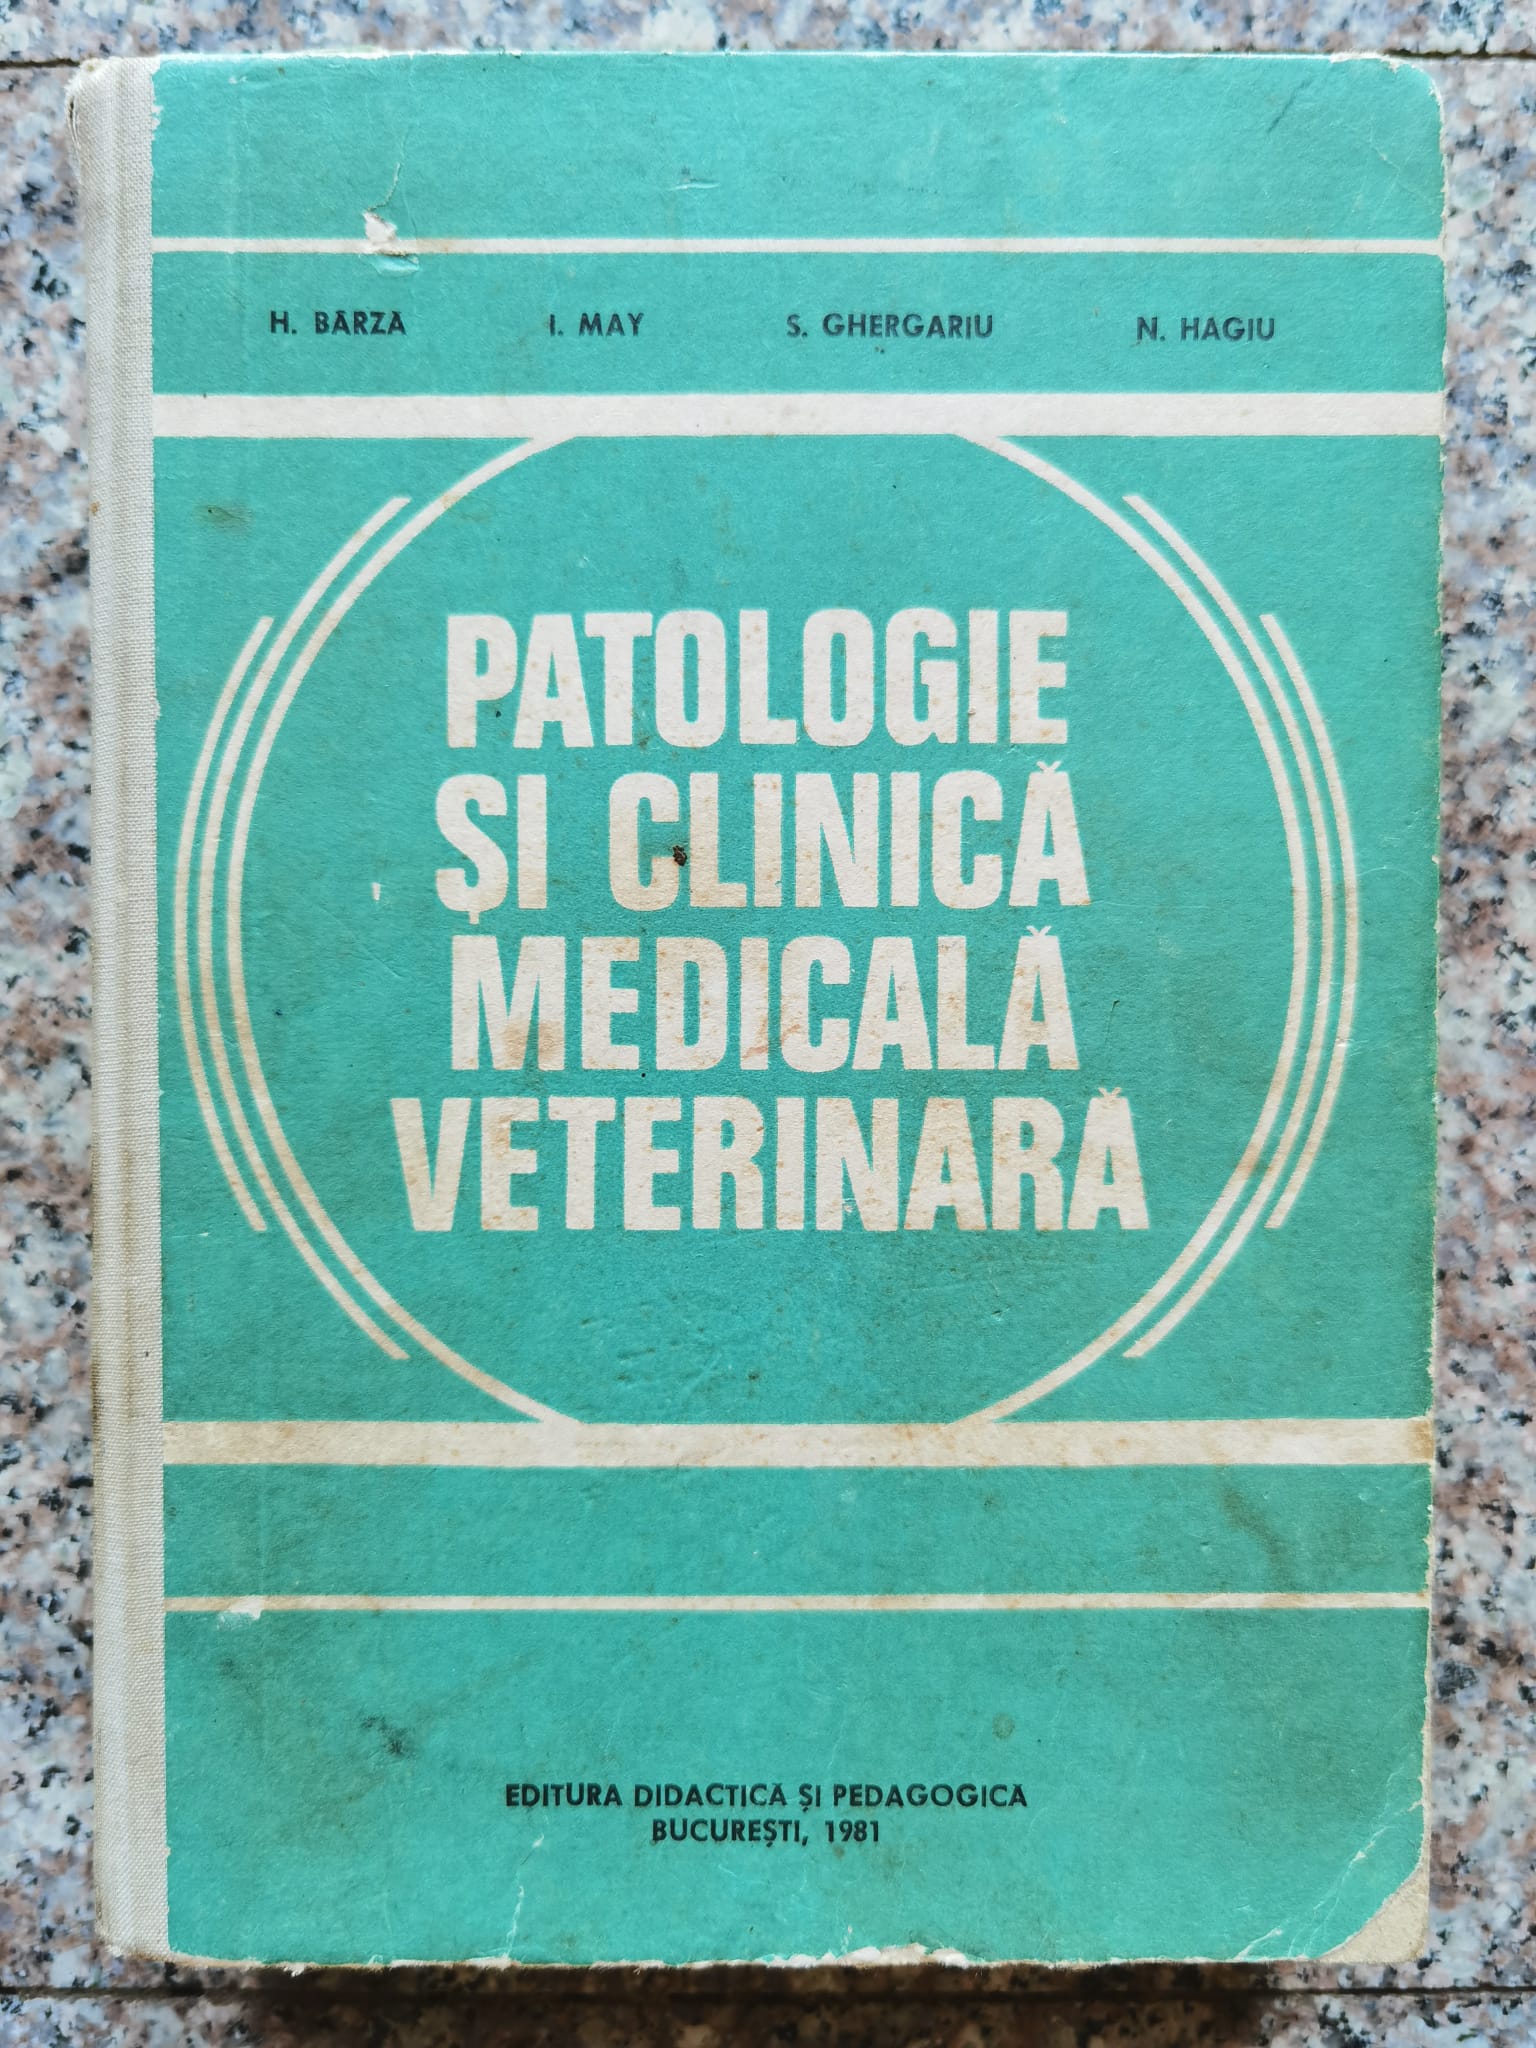 patologie si clinica medicala veterinara                                                             h. barza, i. may, s. ghergariu, n. hagiu                                                            